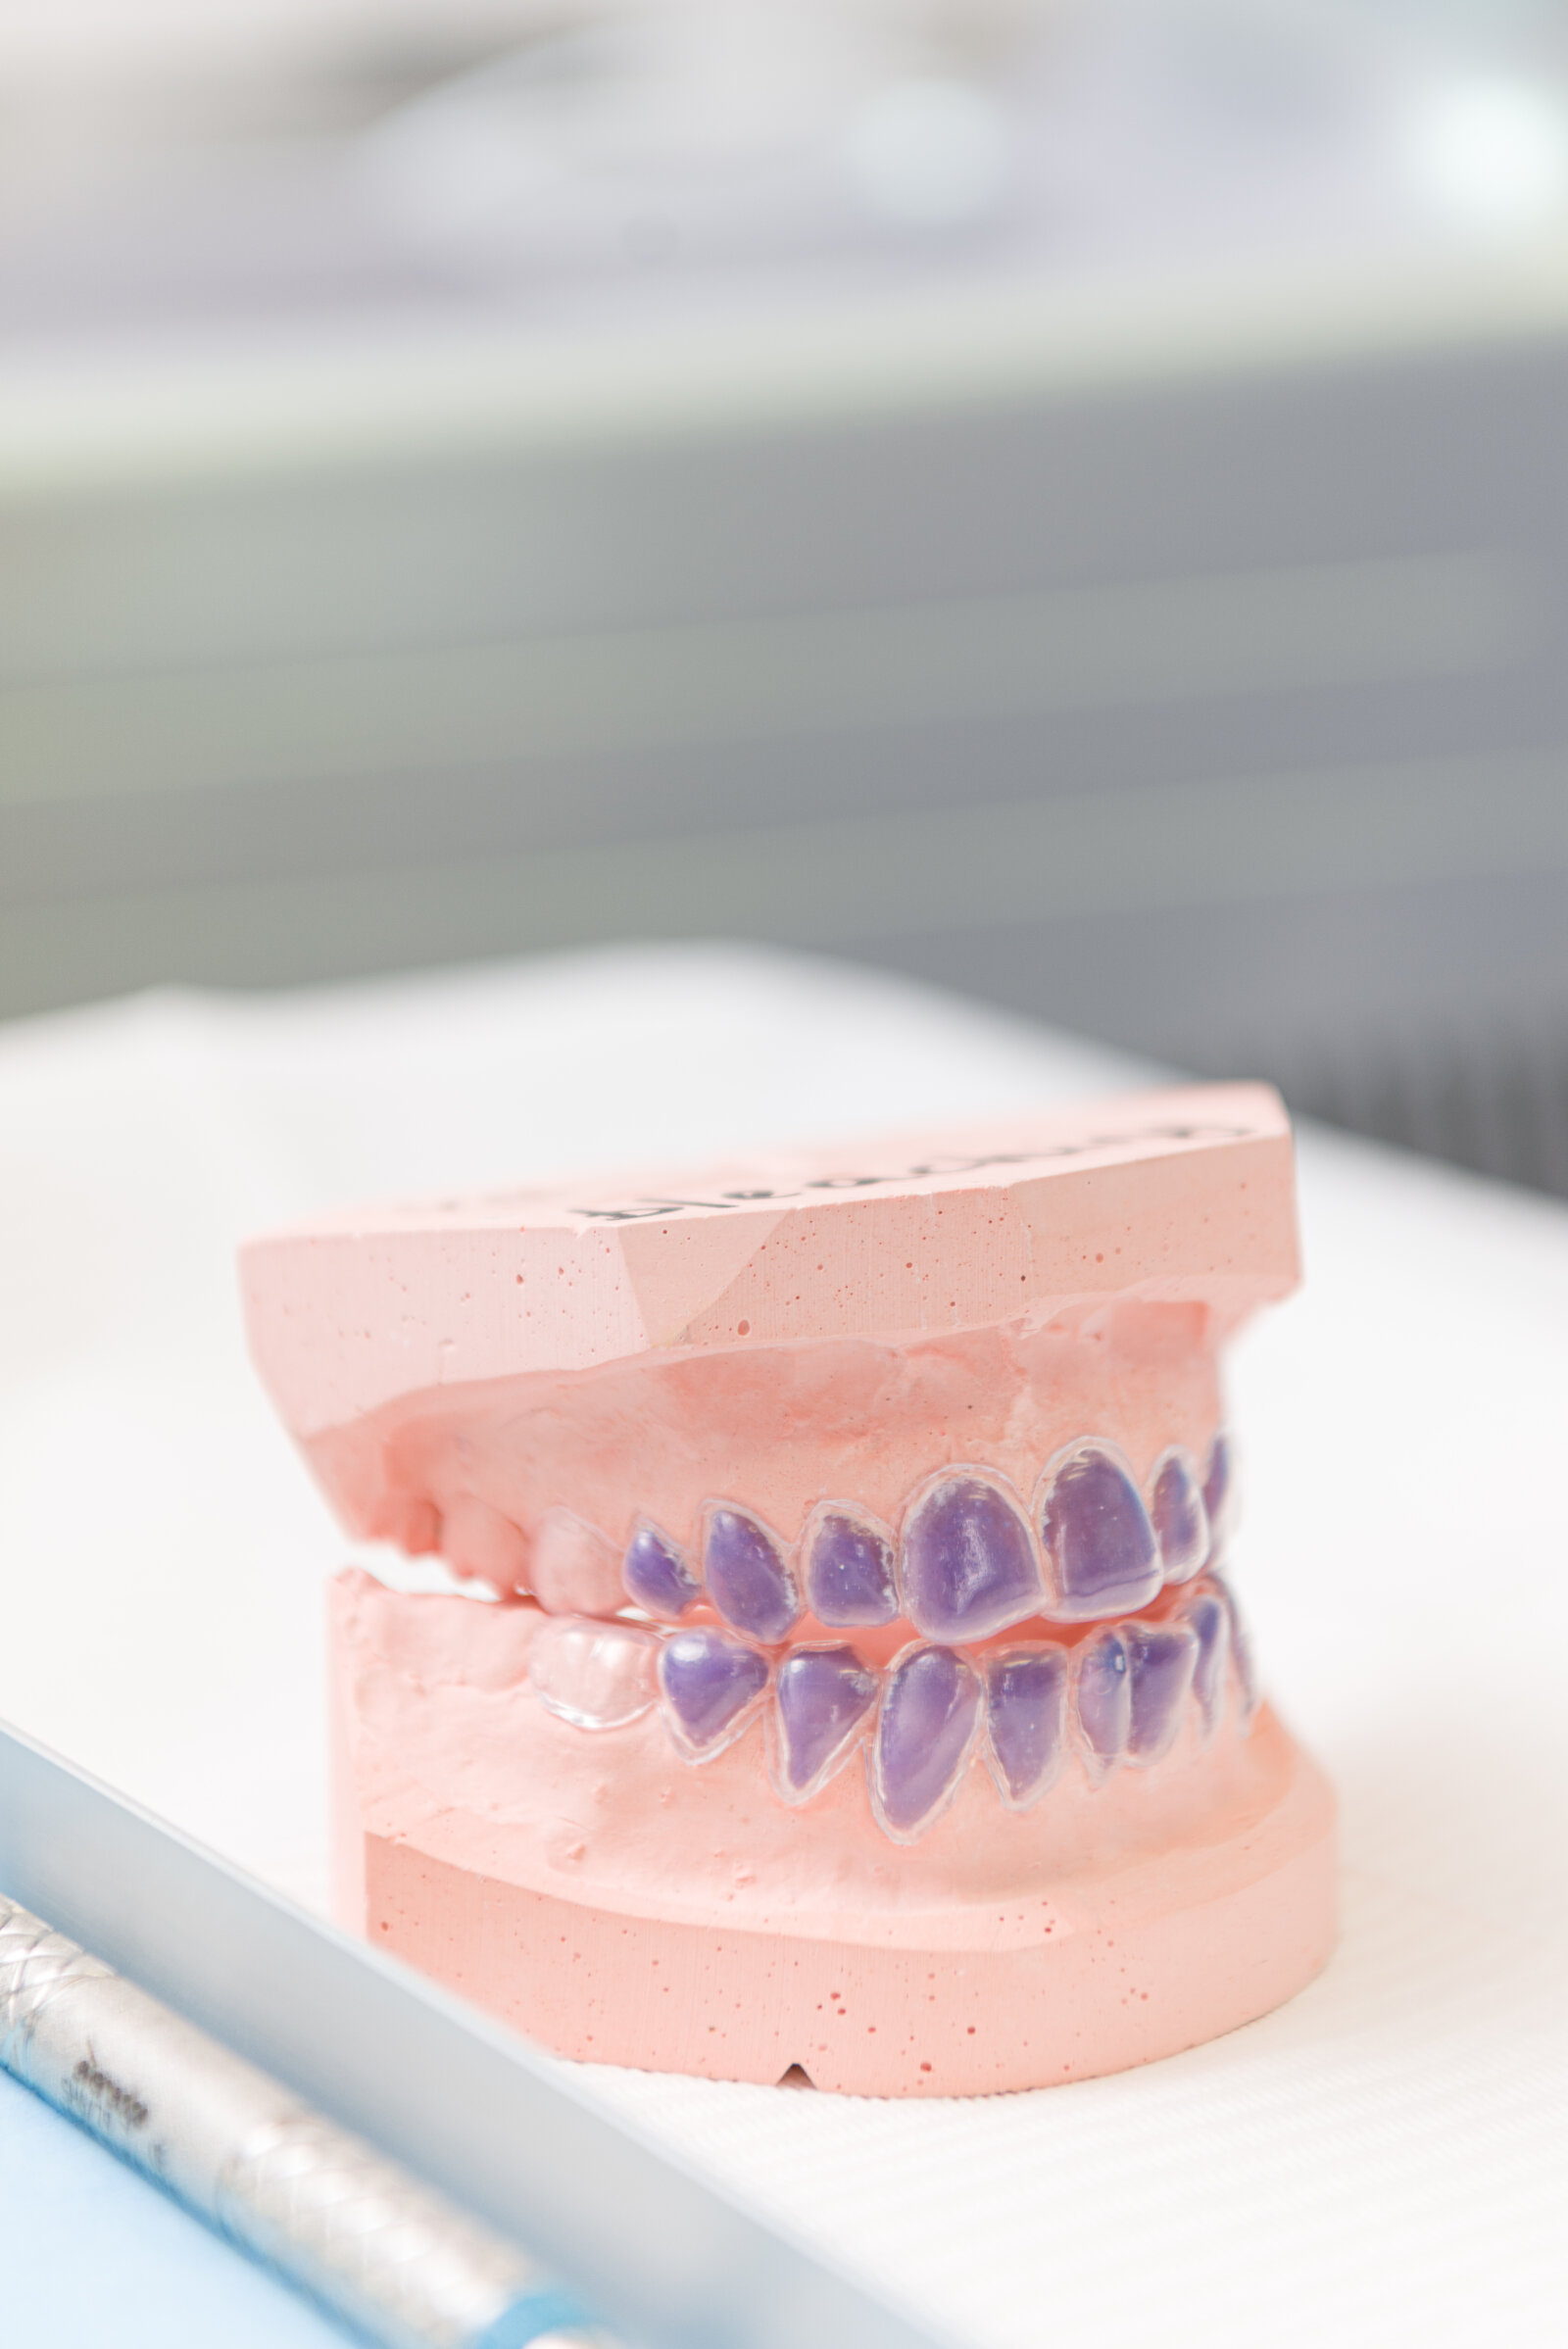 Dental prostheses (dentures)